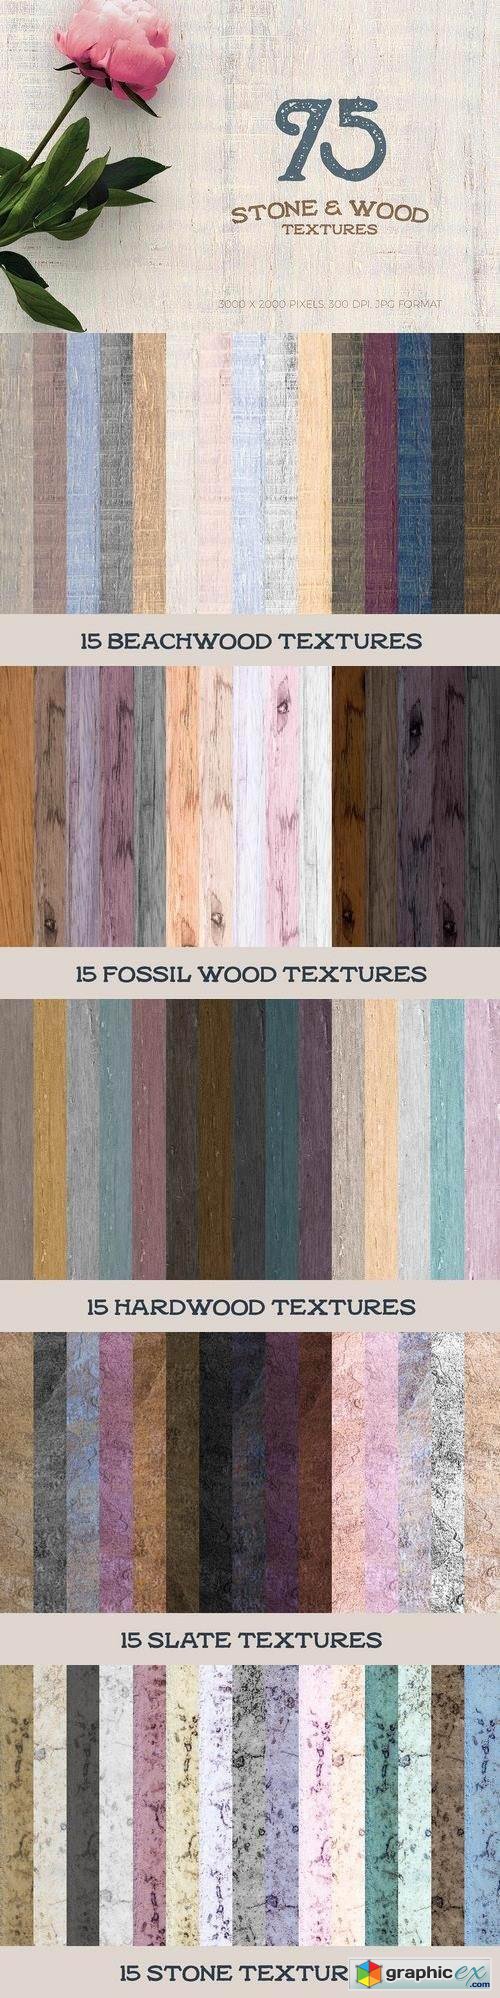 75 Stone & Wood Textures